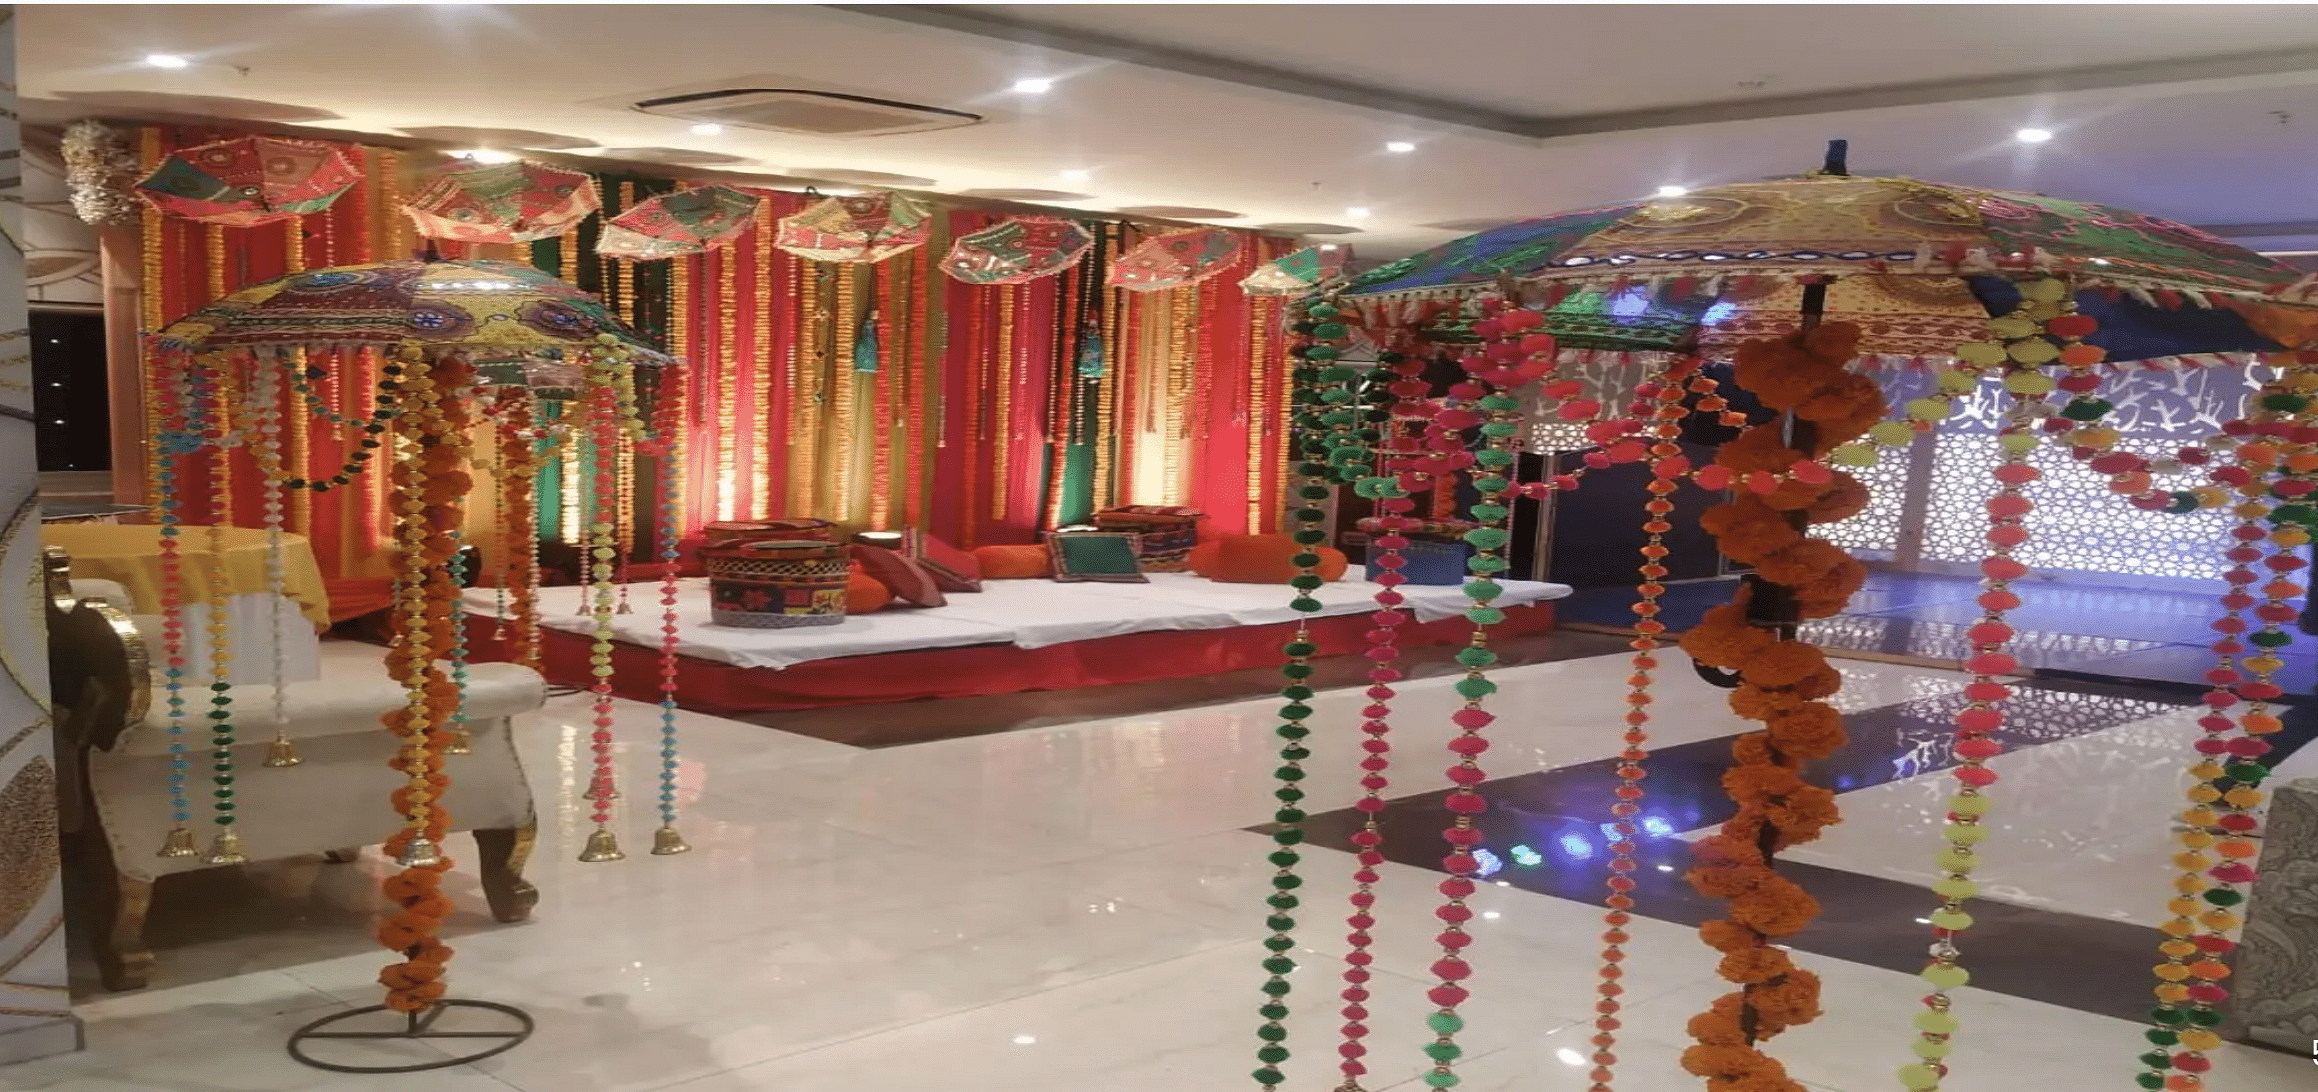 Royal Banquet Hall in Sector 29, Gurgaon